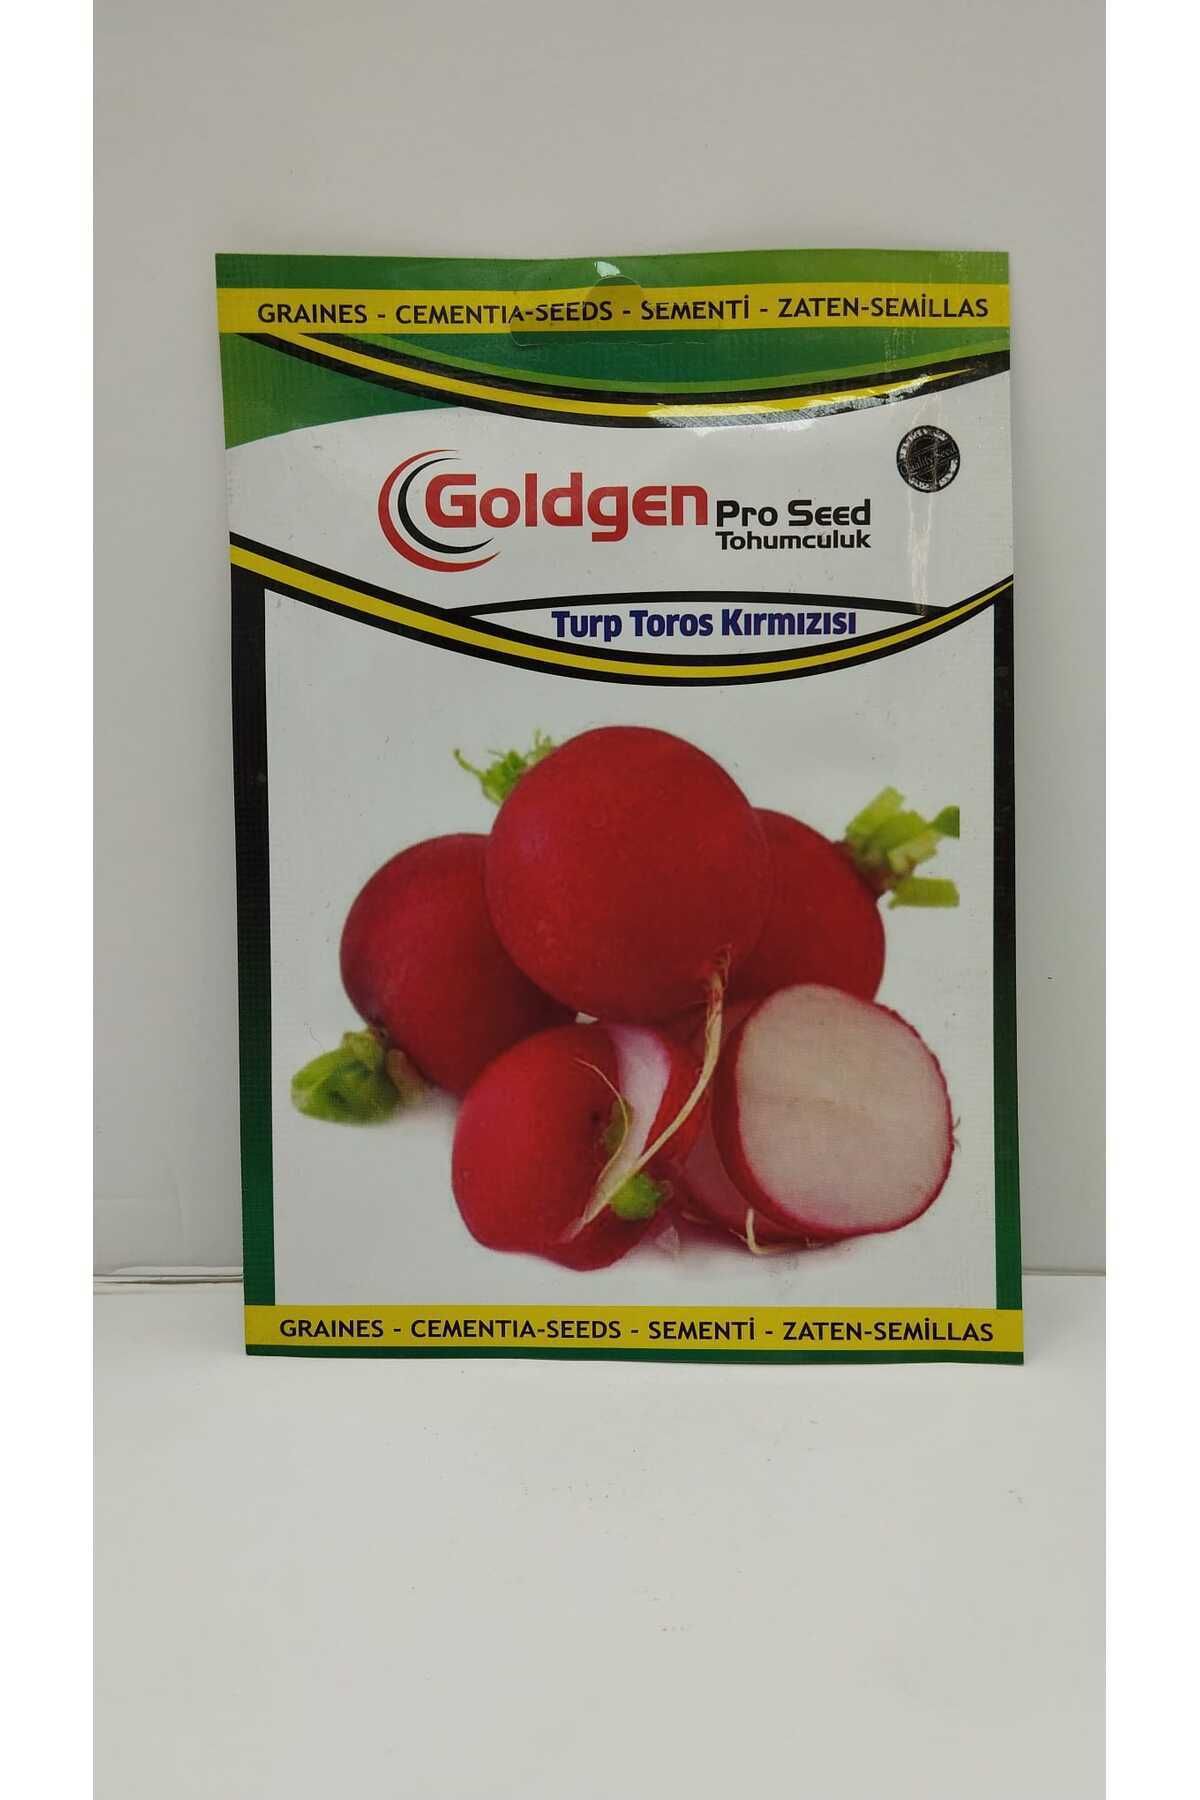 Goldgen Pro Seed Toros Kırmızısı Turp Tohumu